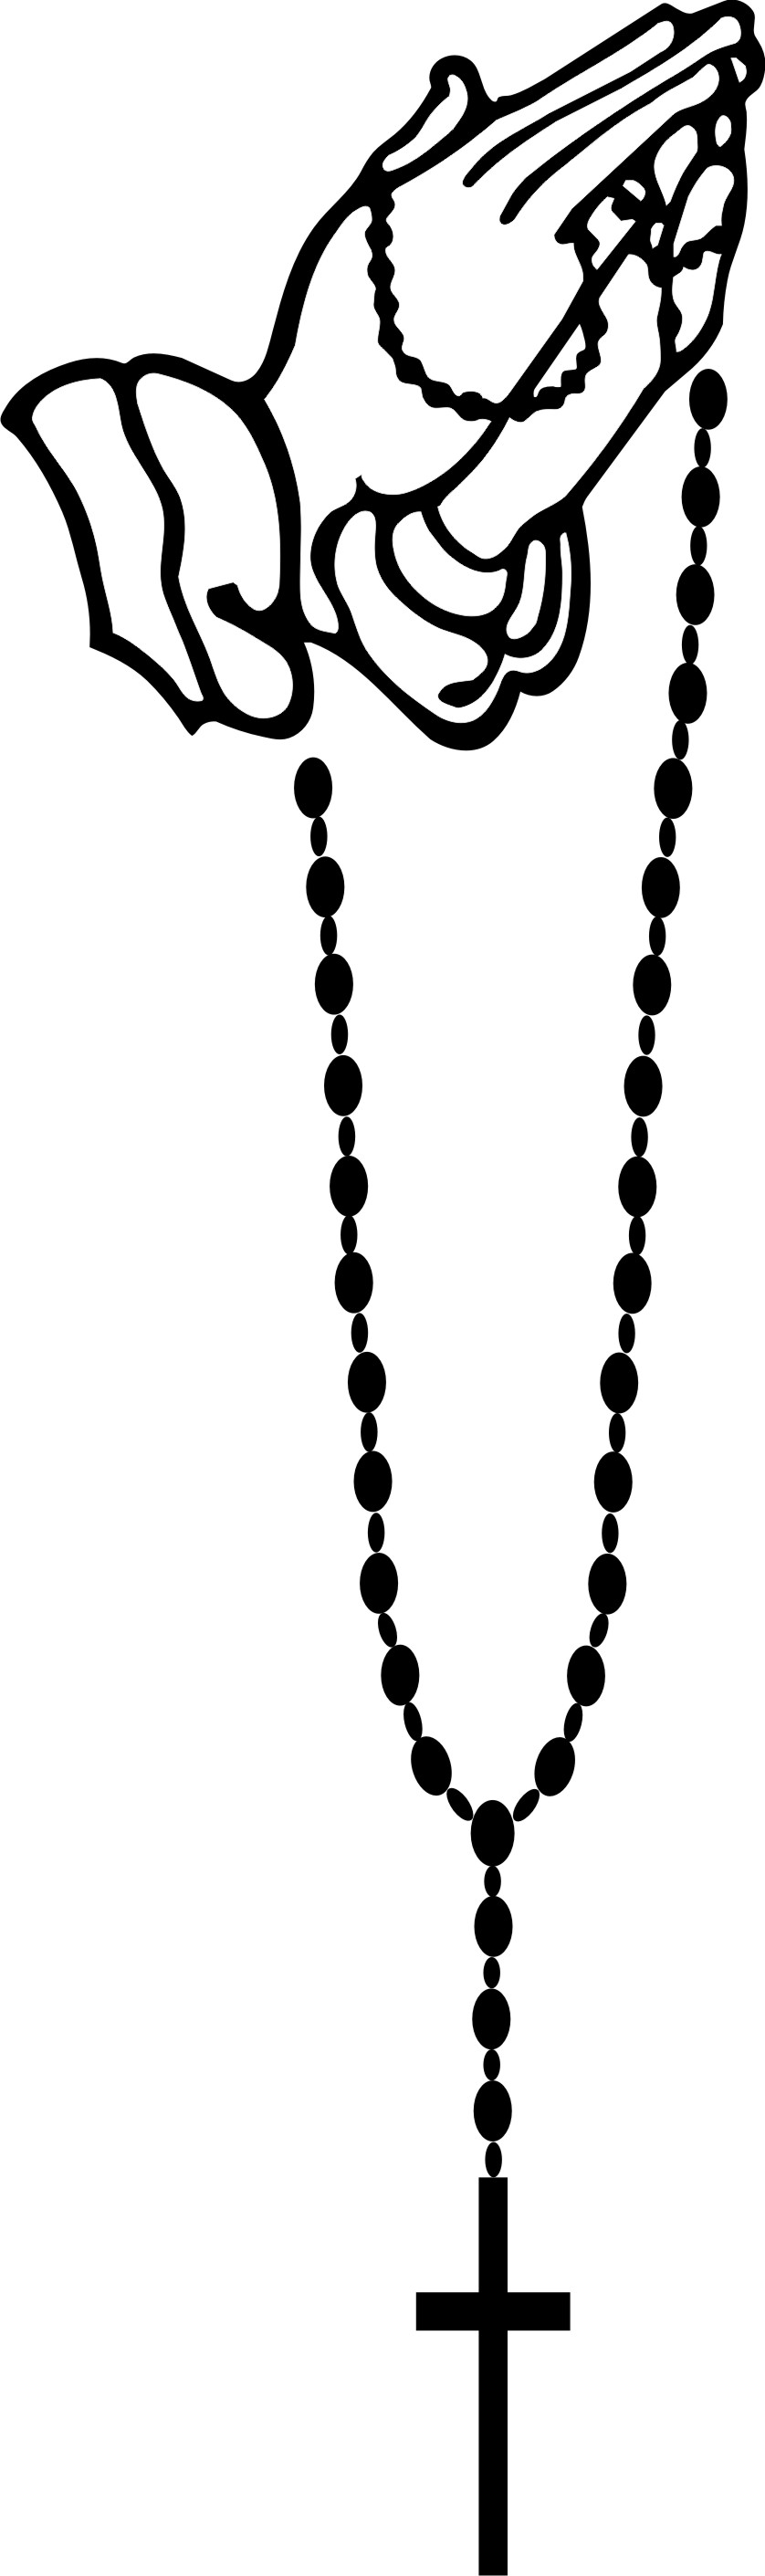 Rosary images clip art - Clip